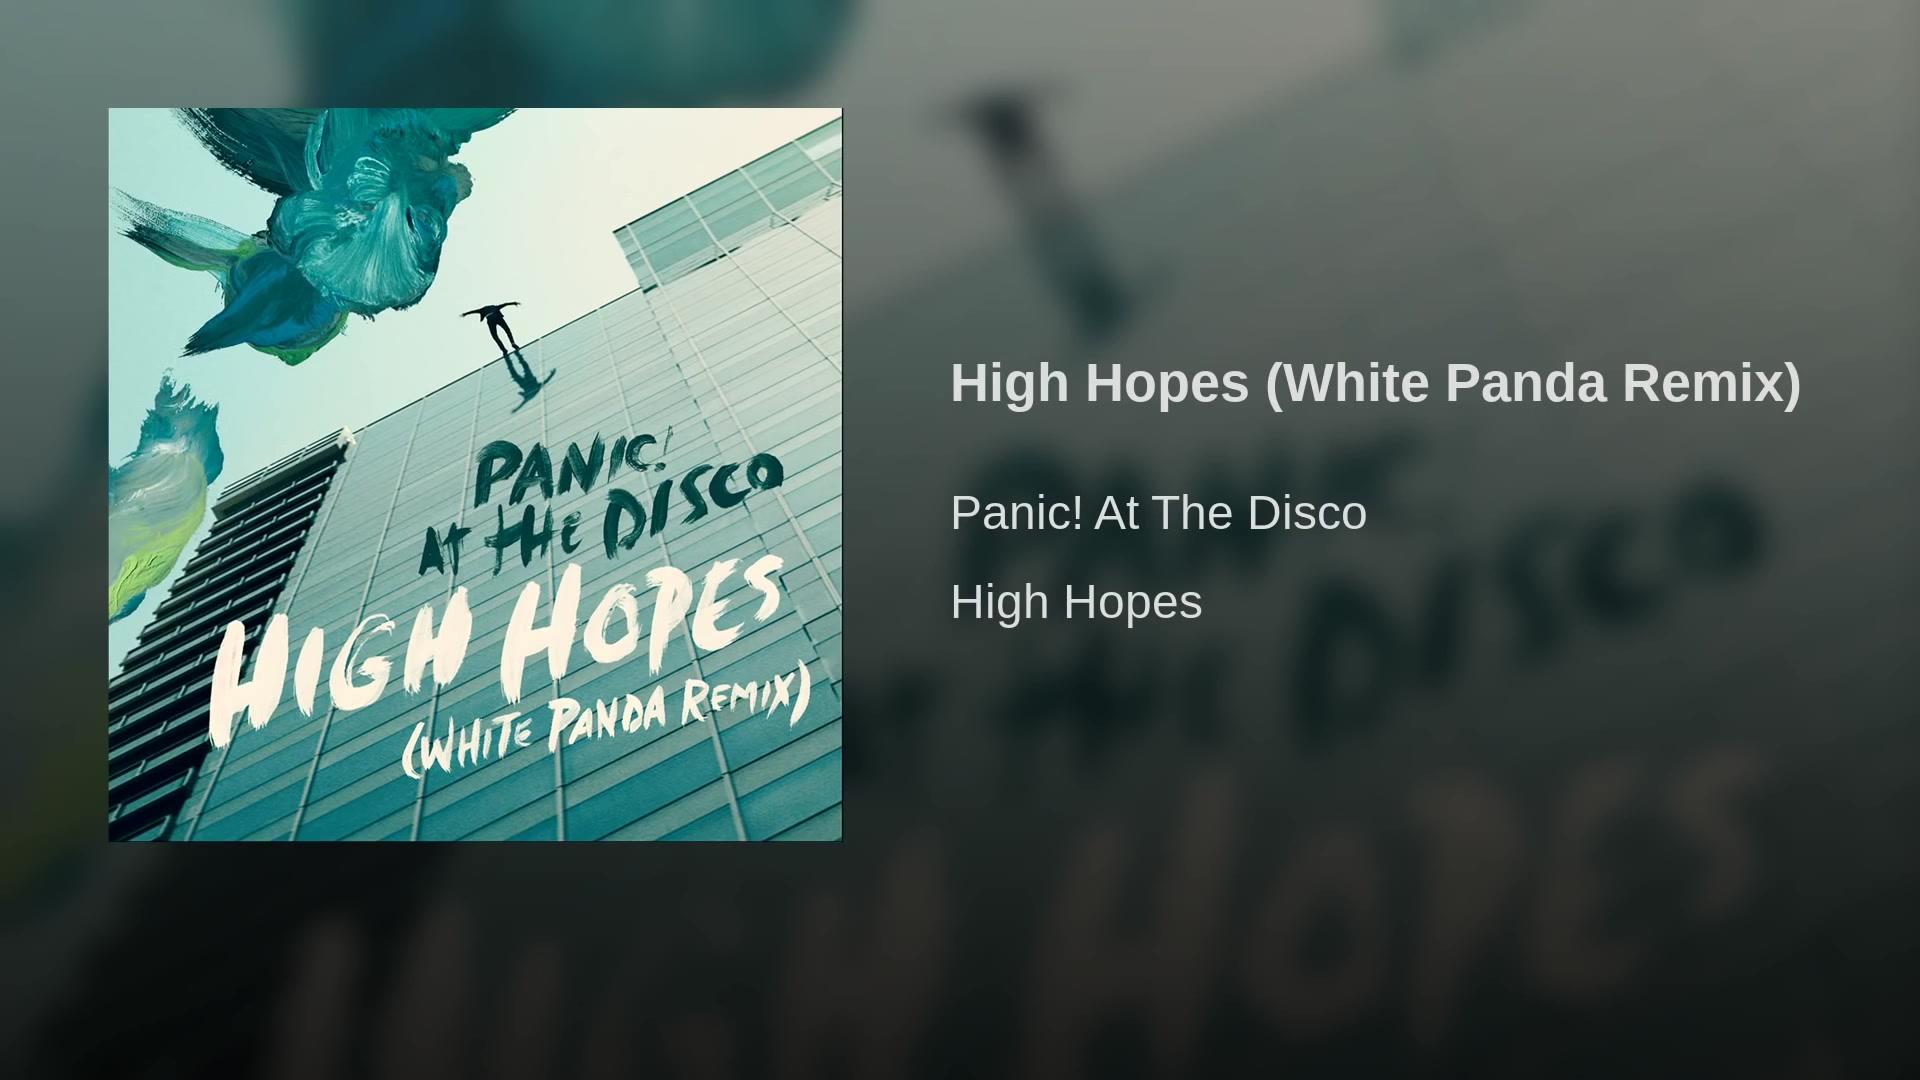 High Hopes! At The Disco